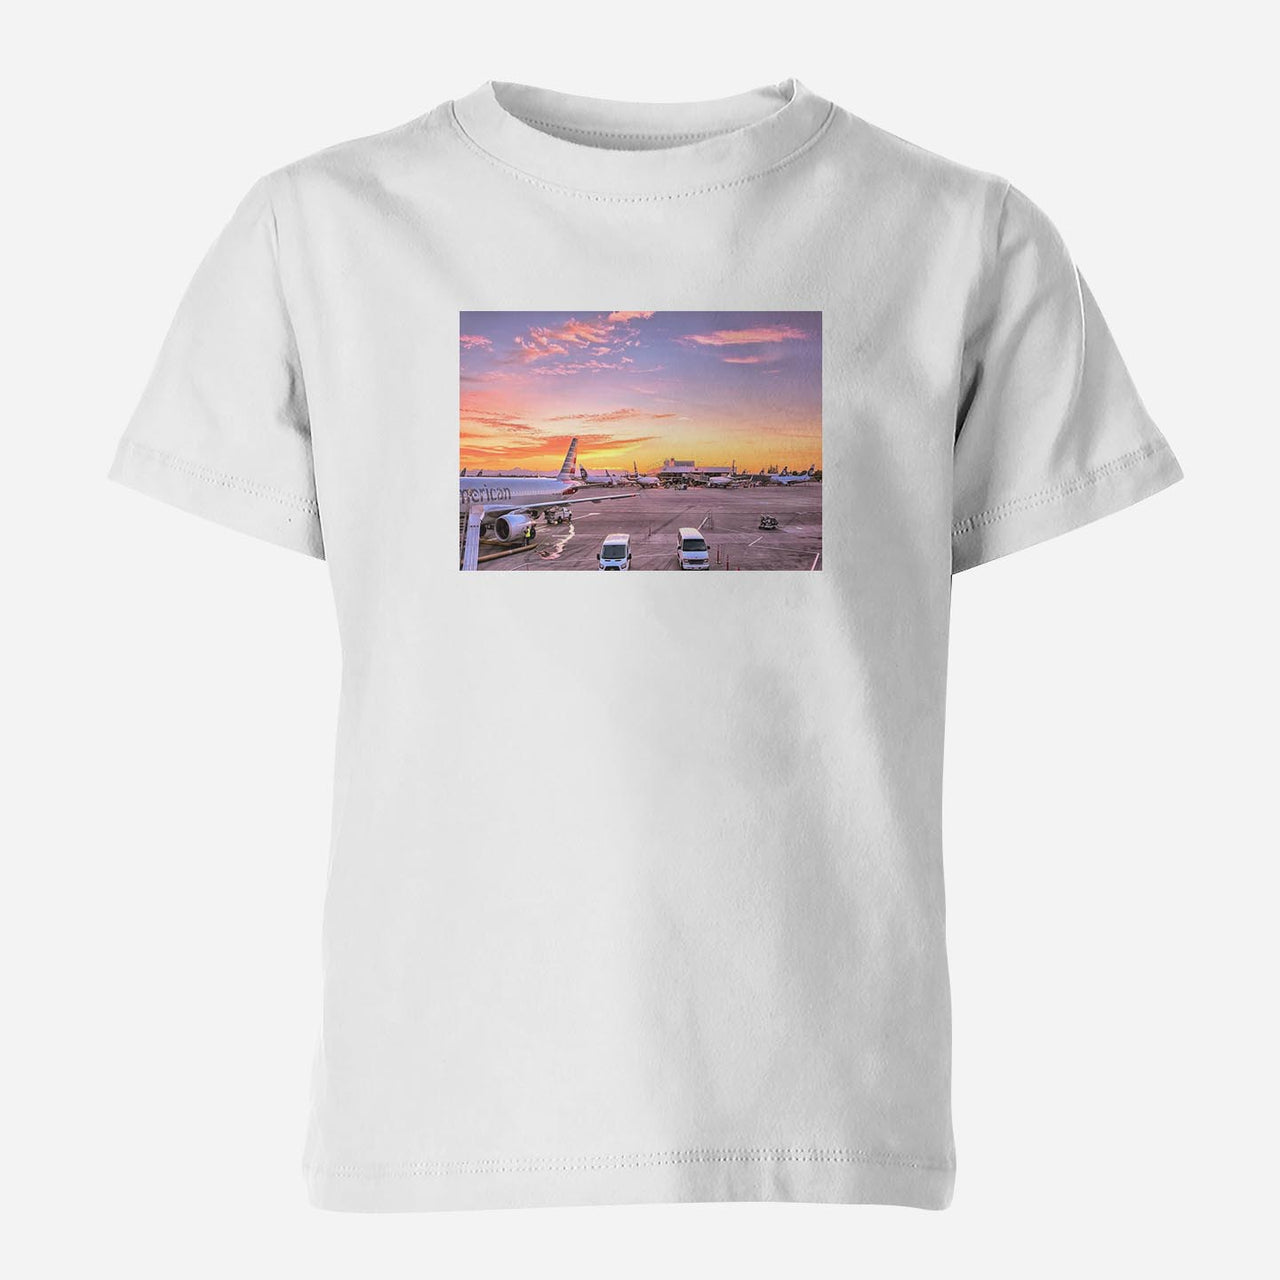 Airport Photo During Sunset Designed Children T-Shirts